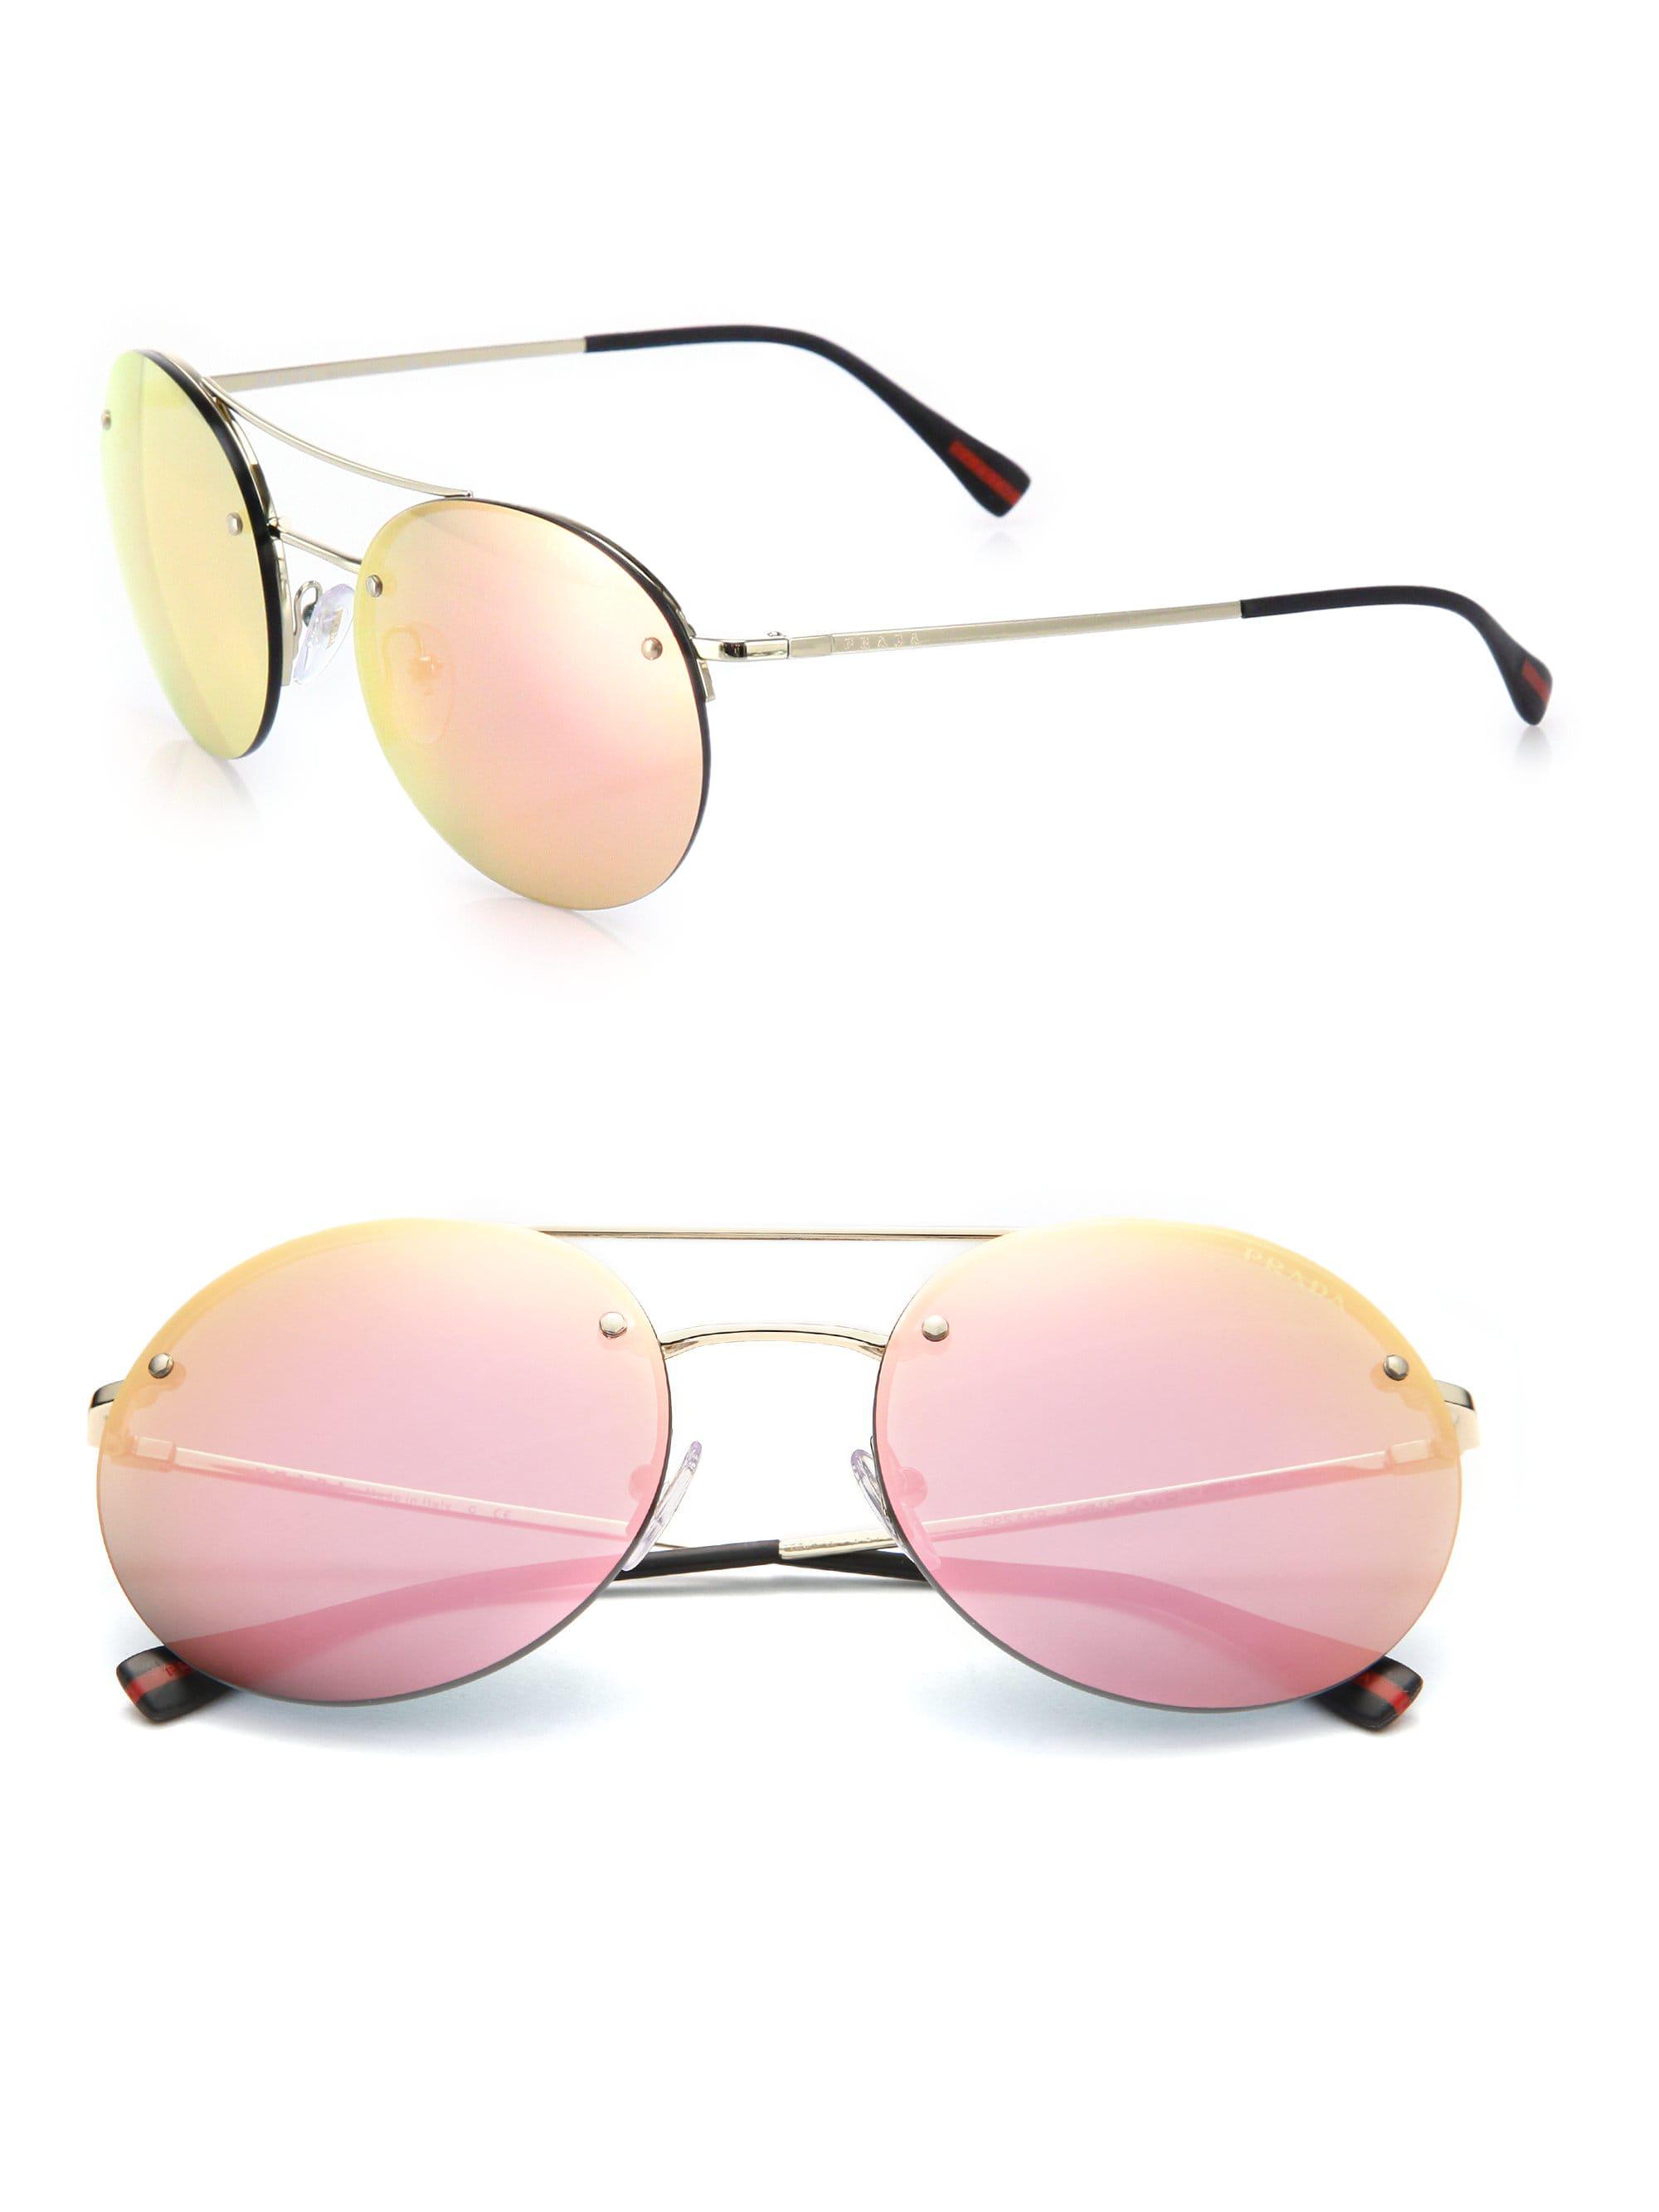 prada rose gold sunglasses